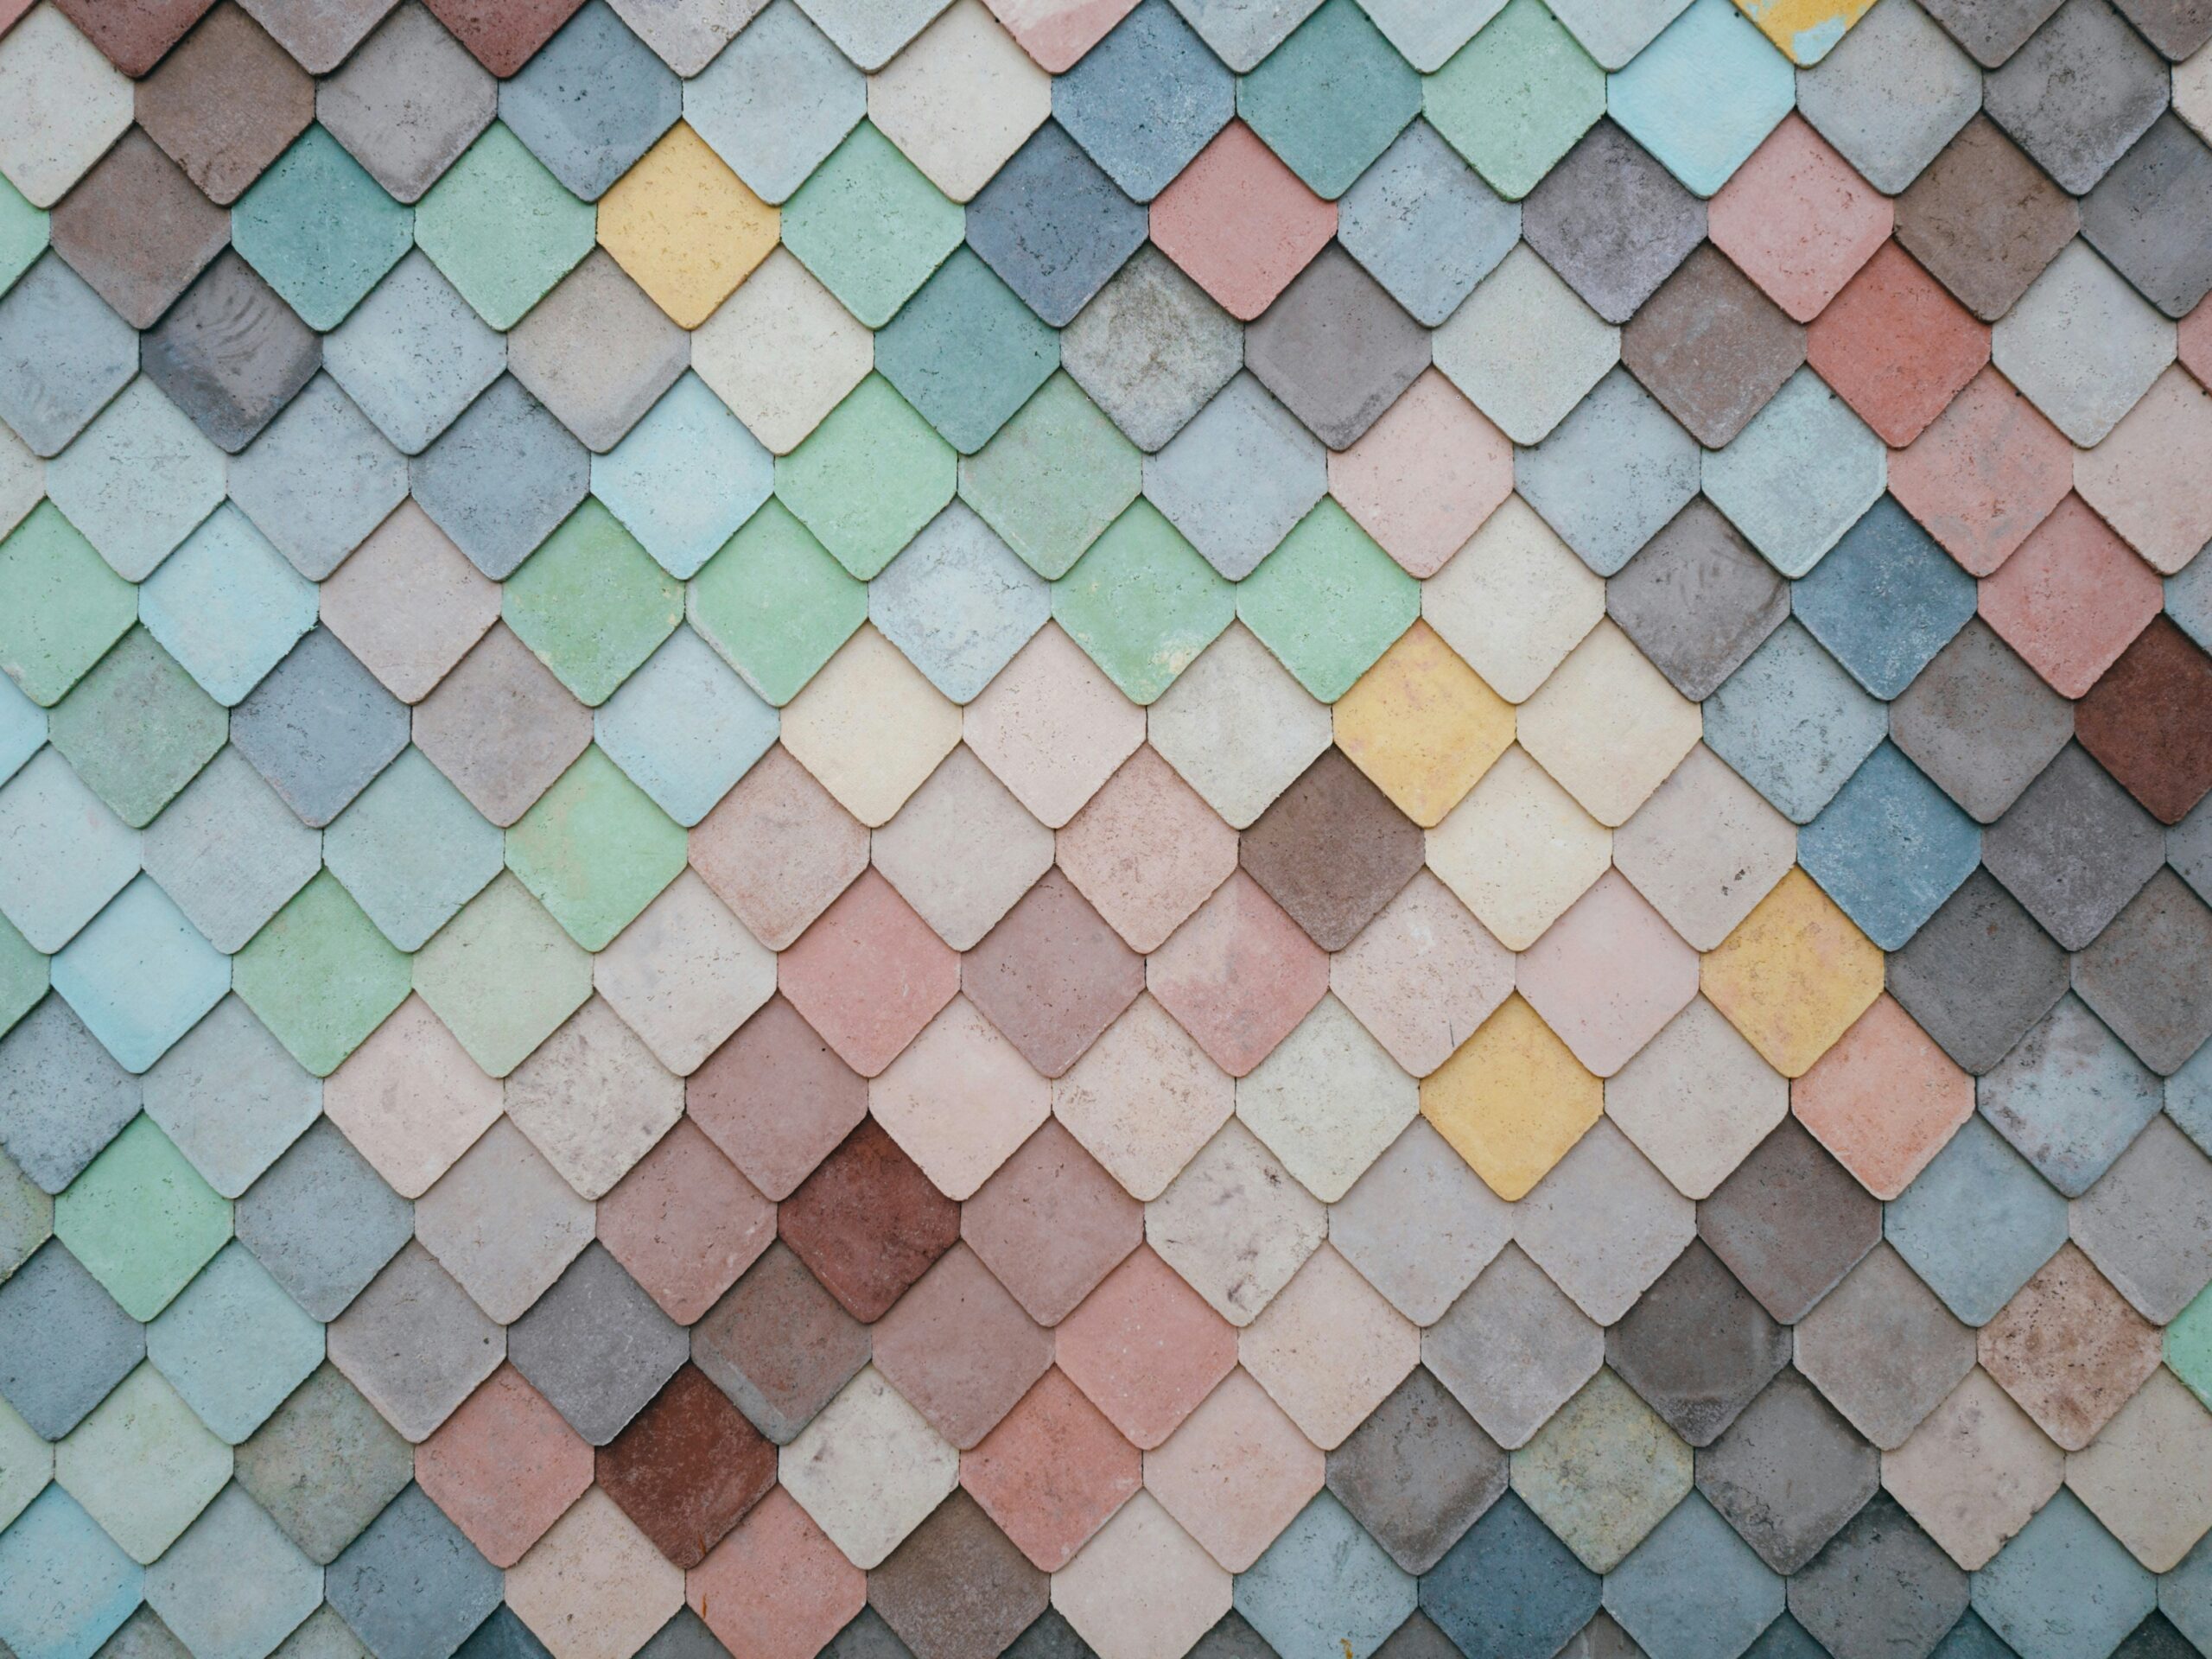 Benefits of Mosaic Tile